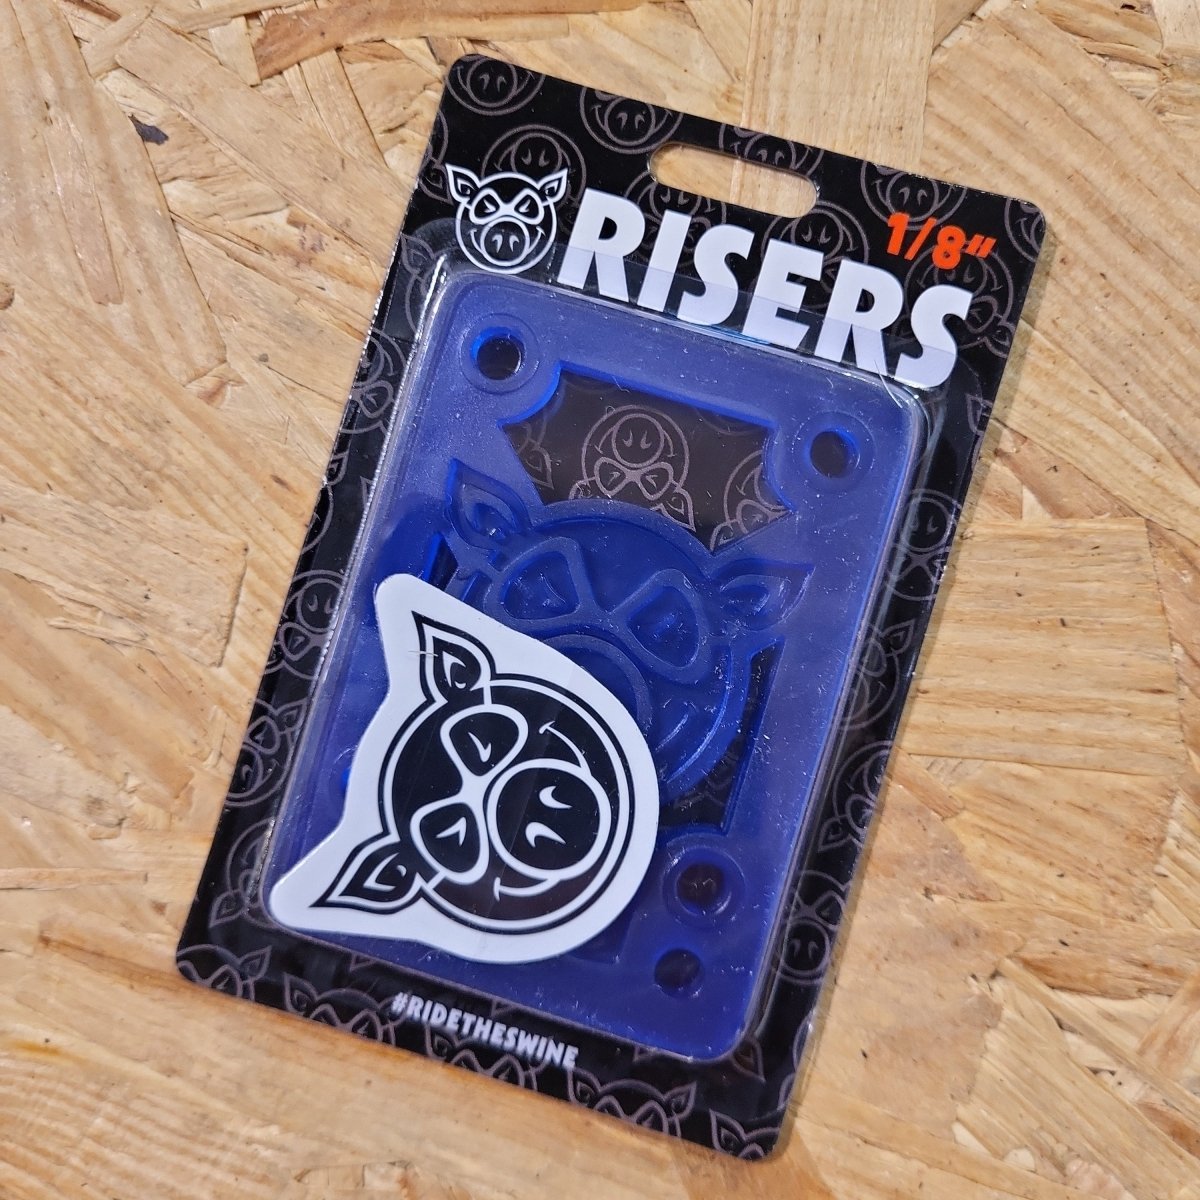 Pig 1/8" 3mm Rubber Riserpads Shockpads blue - Rollbrett Mission